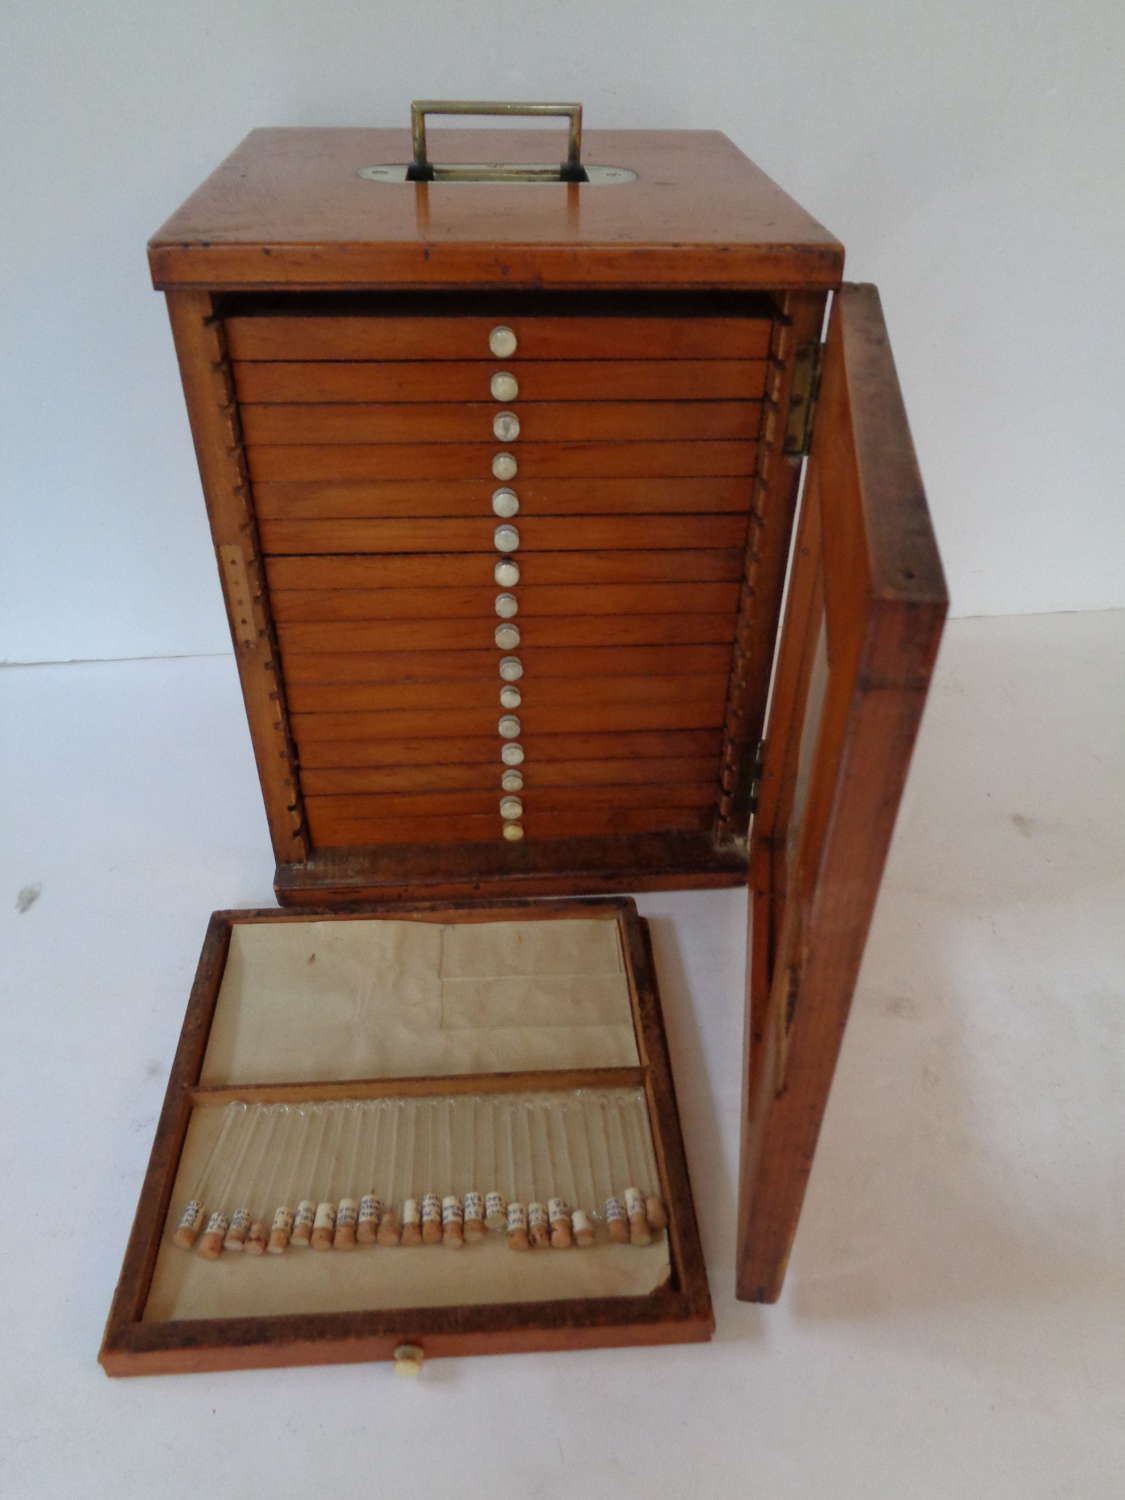 Antique Portable Collector's / Specimen Cabinet - 23 Mini Test Tubes